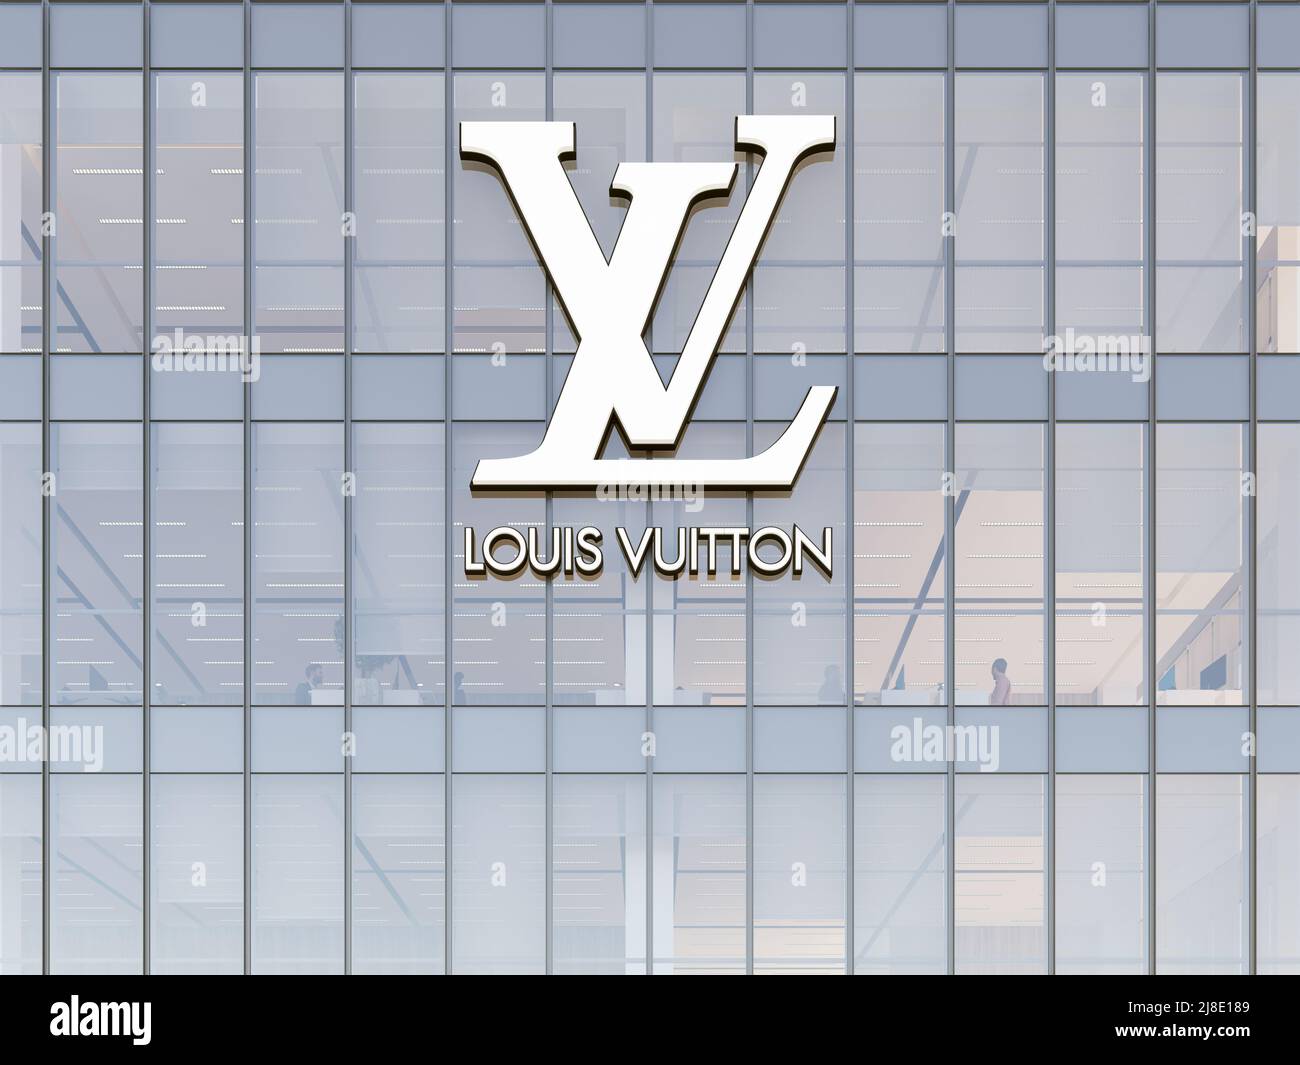 LVMH Luxury Goods Company Logo Editorial Stock Image - Image of